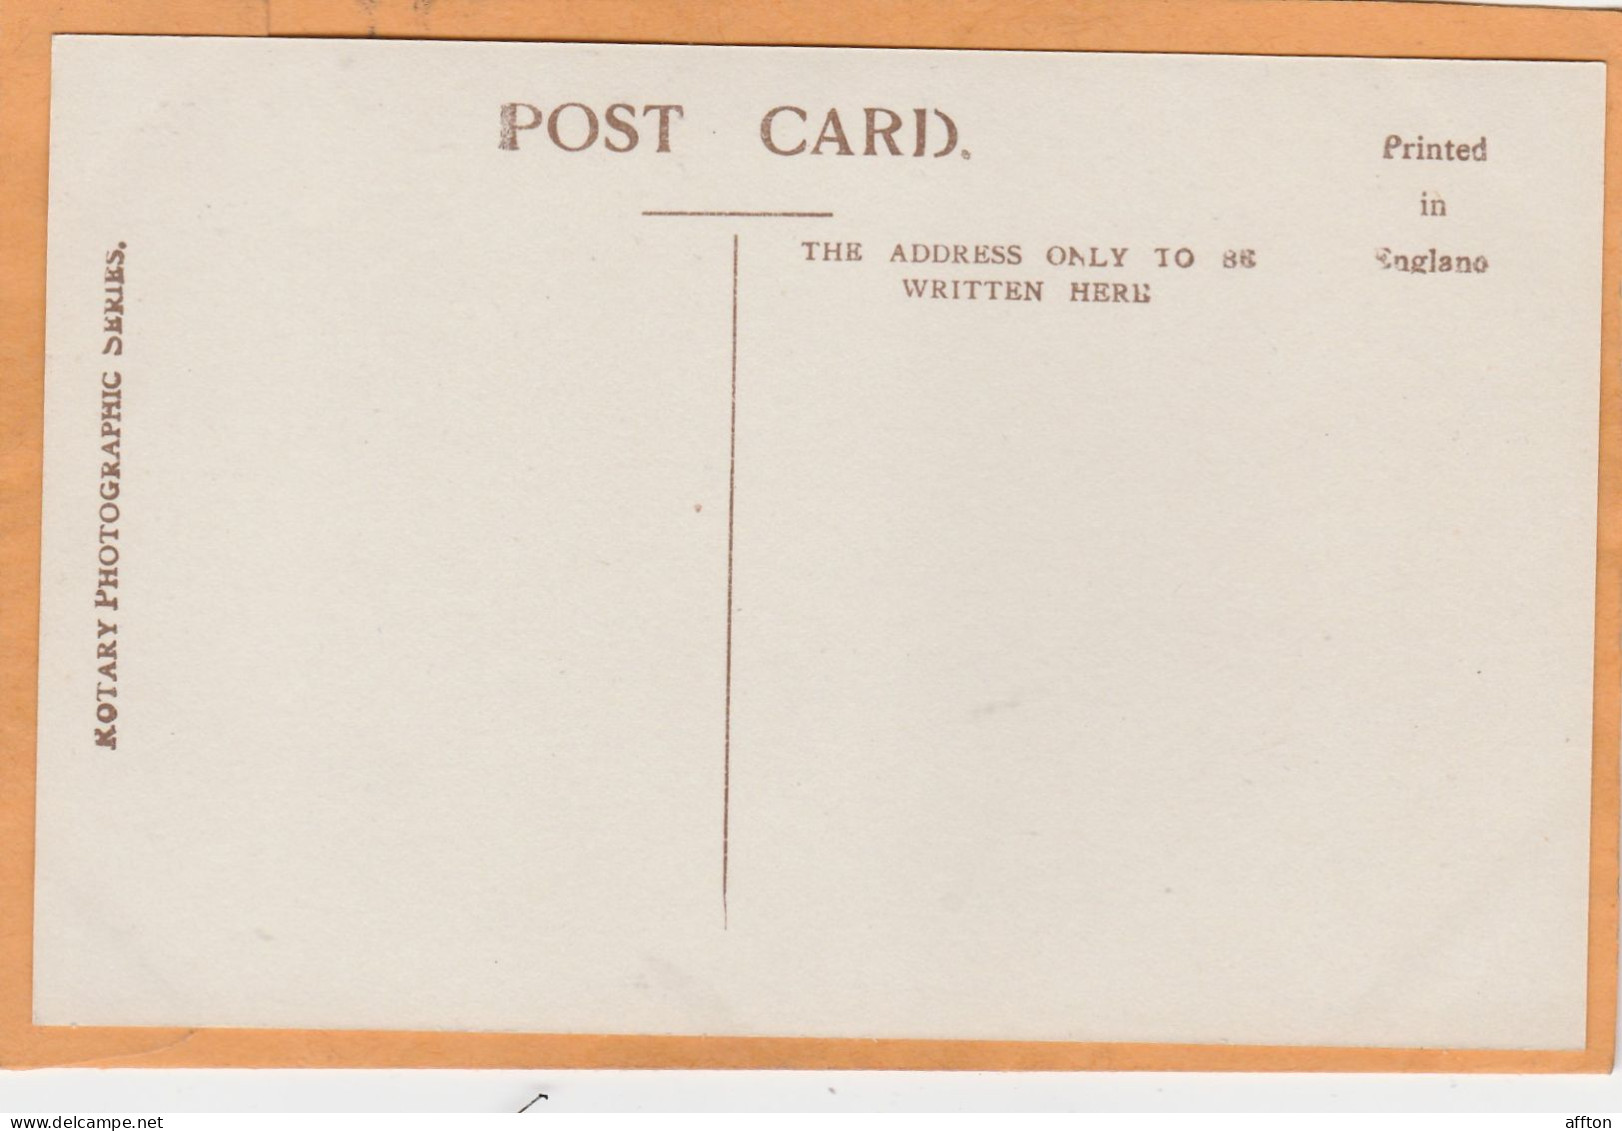 London UK 1910 Postcard - Houses Of Parliament